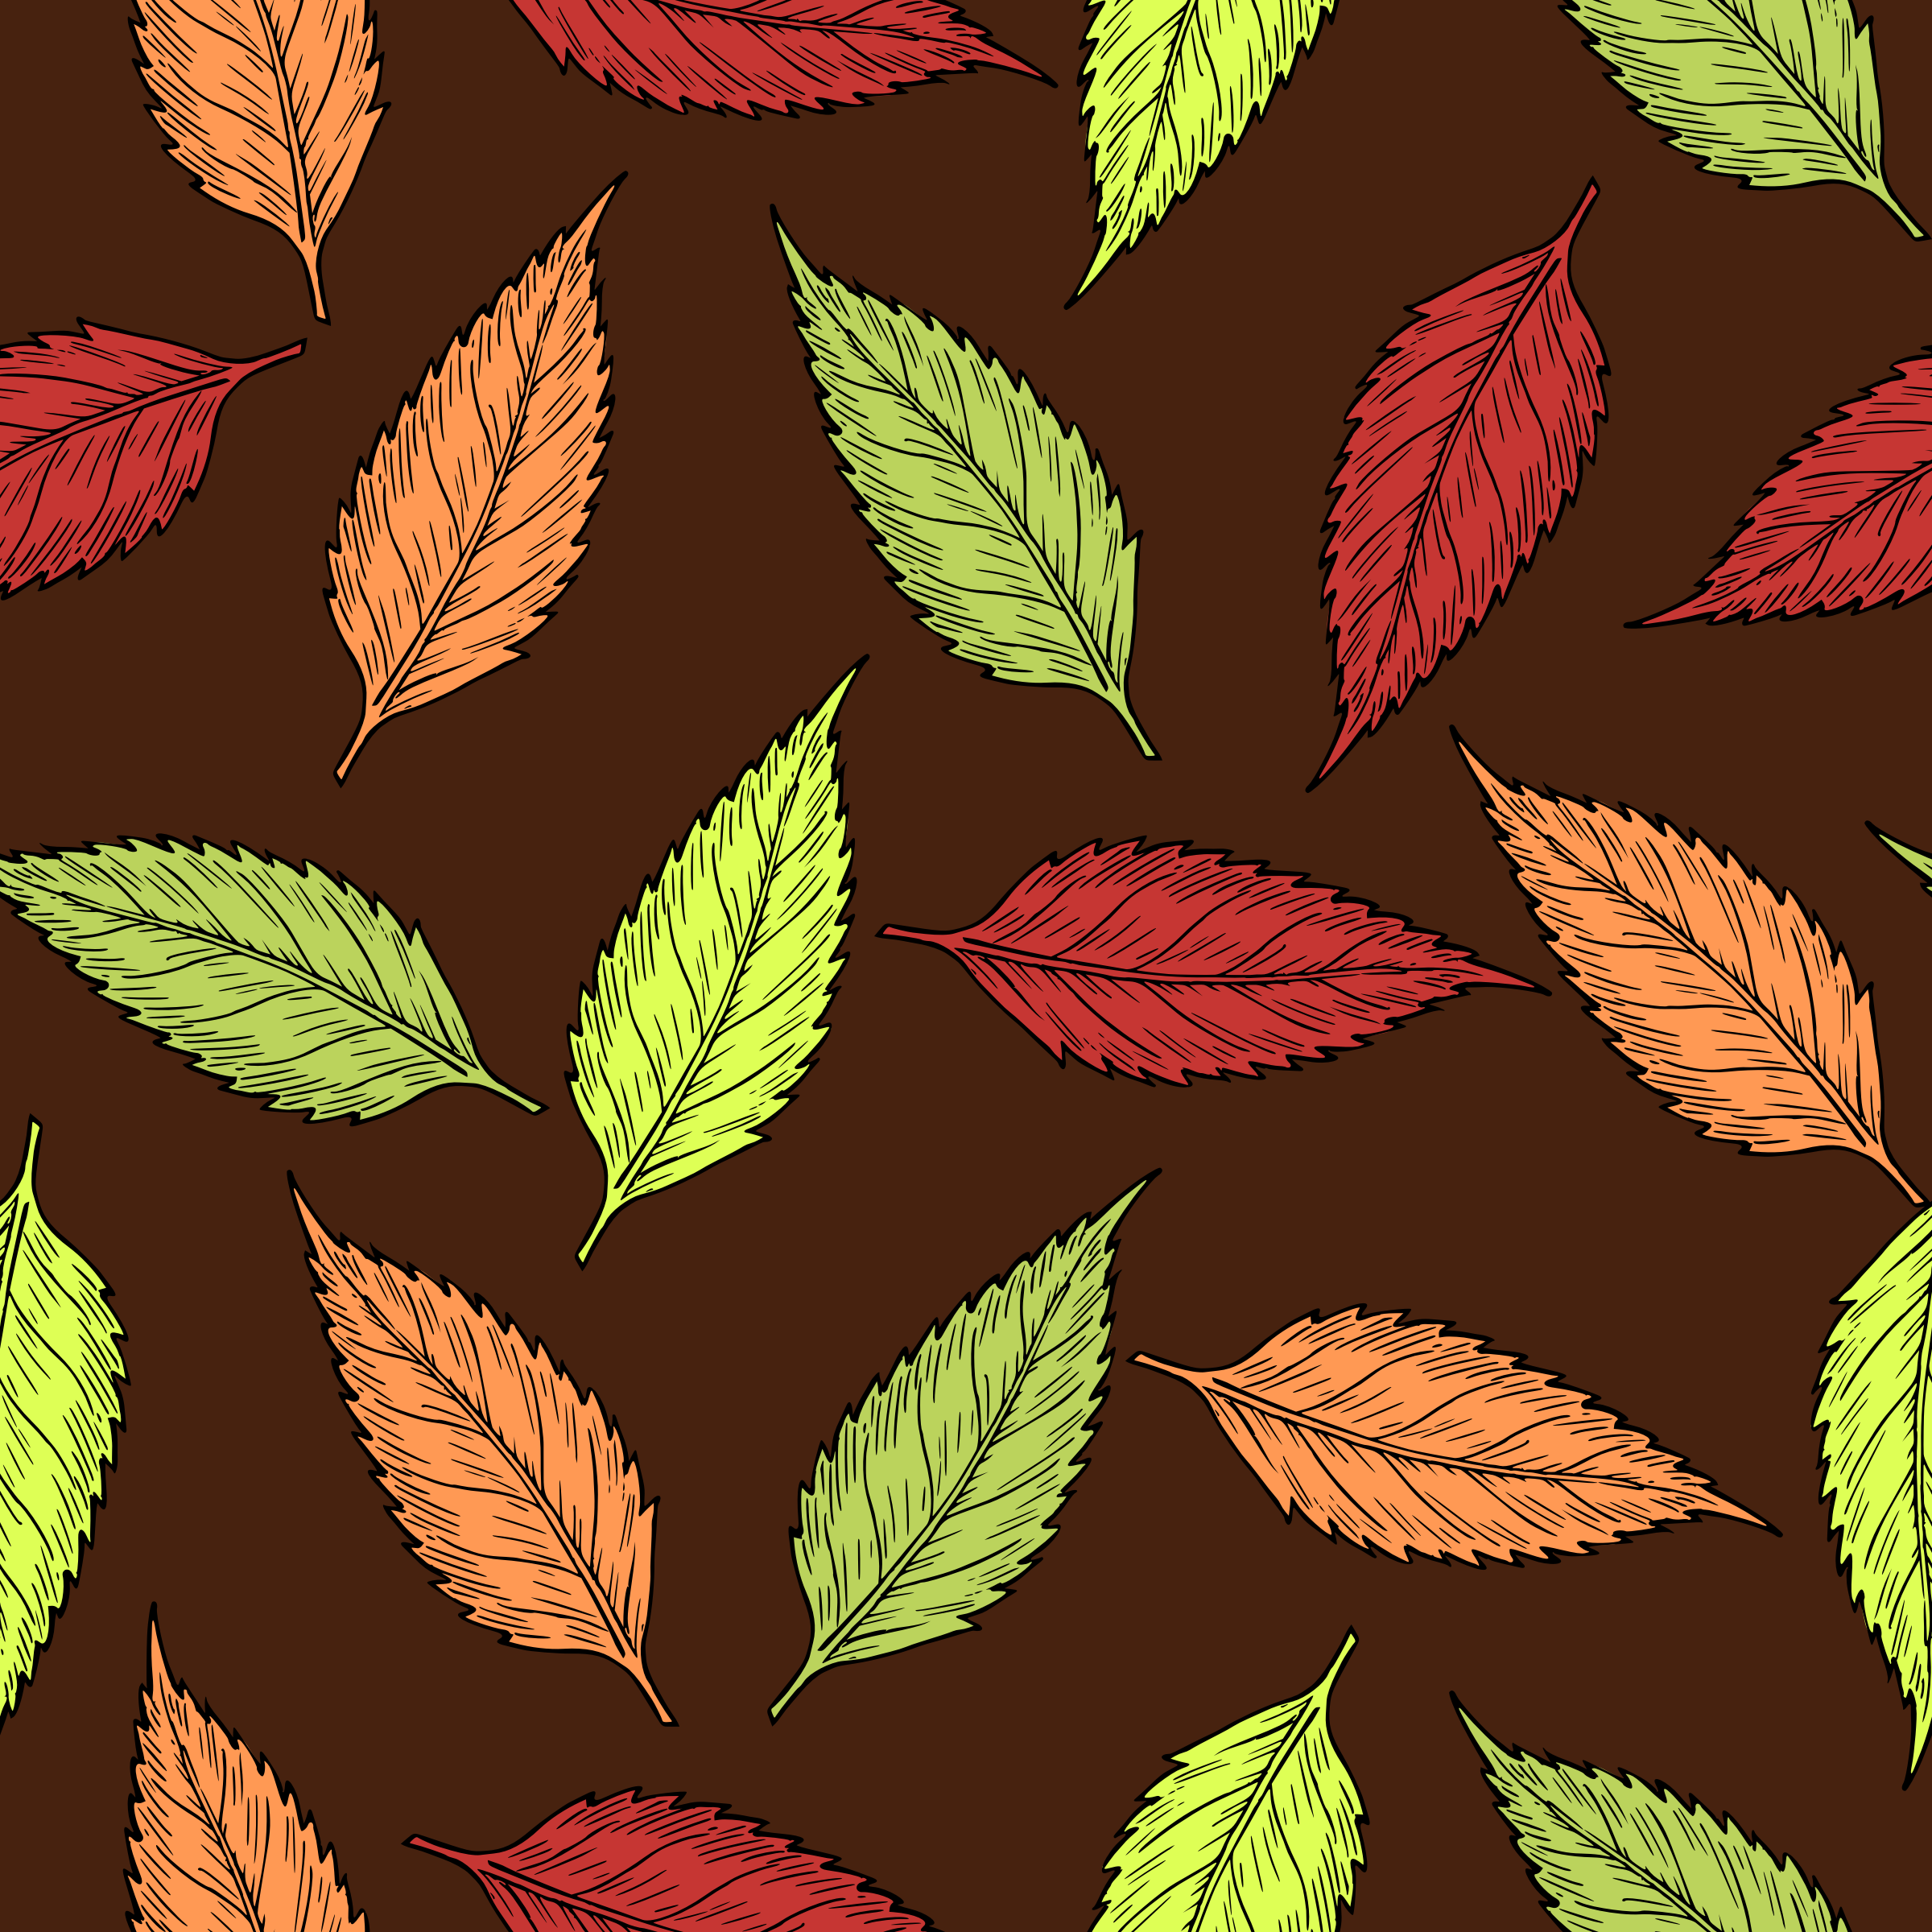 Autumn Leaves Vector Clipart image - Free stock photo - Public Domain